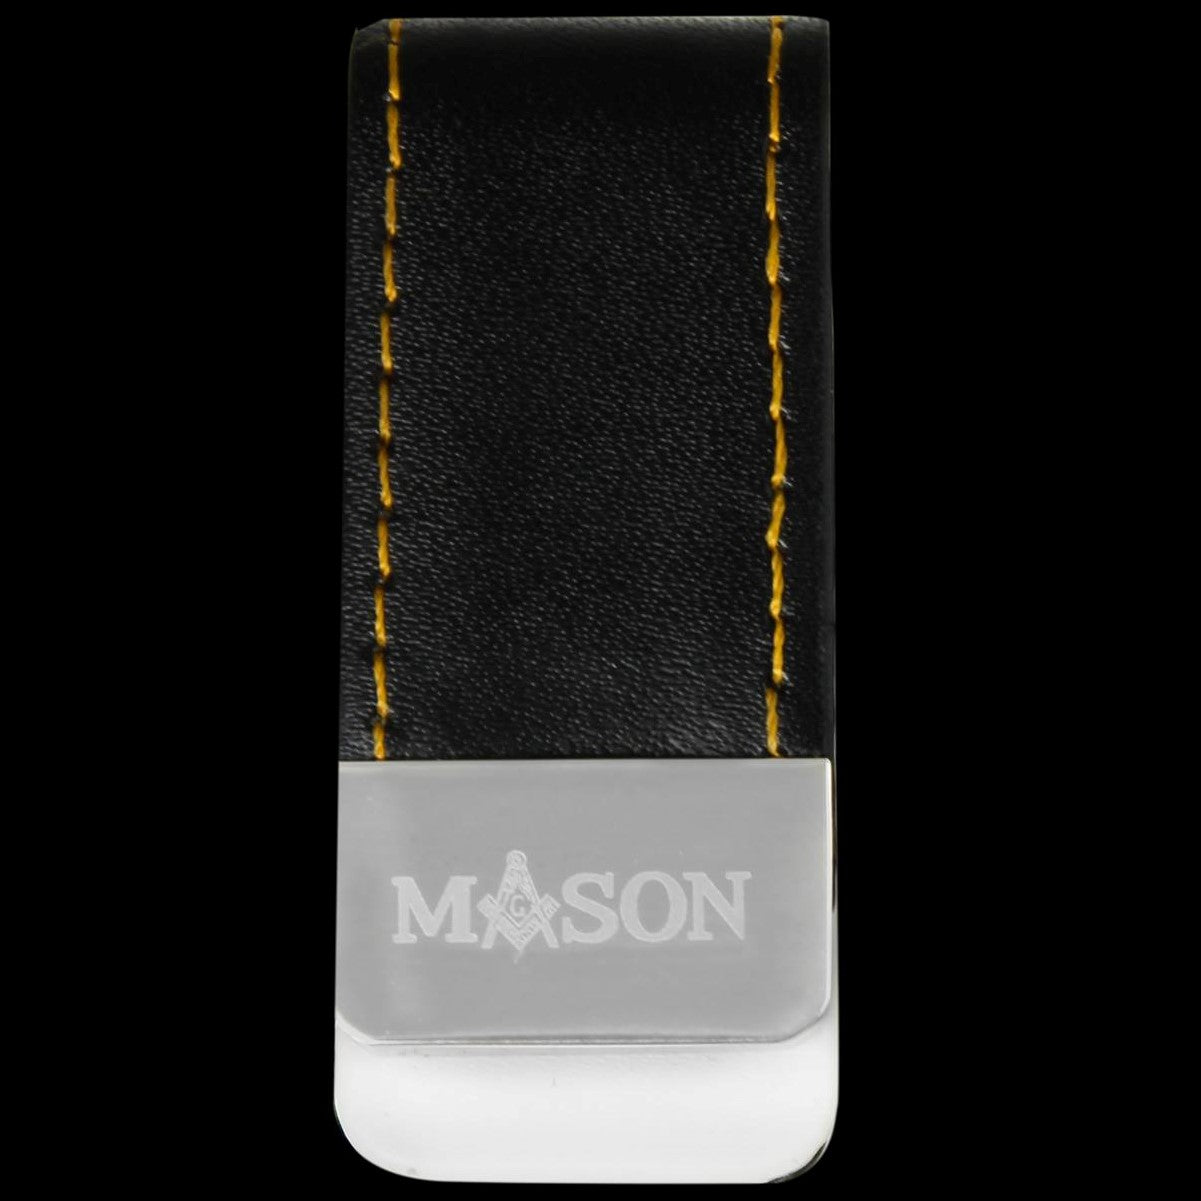 Mason Leather Money Clip holder